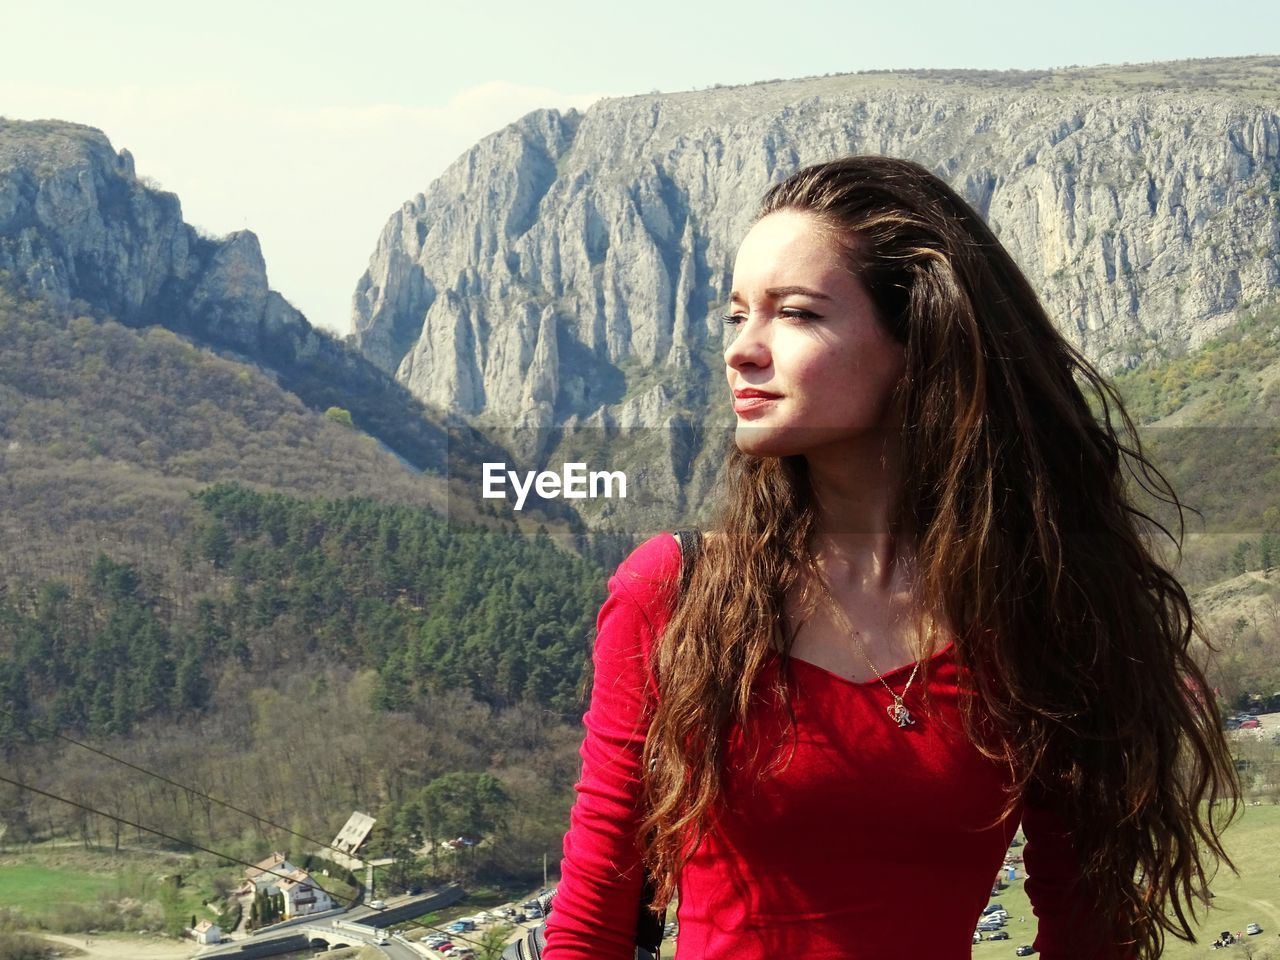 BEAUTIFUL YOUNG WOMAN LOOKING AT MOUNTAIN